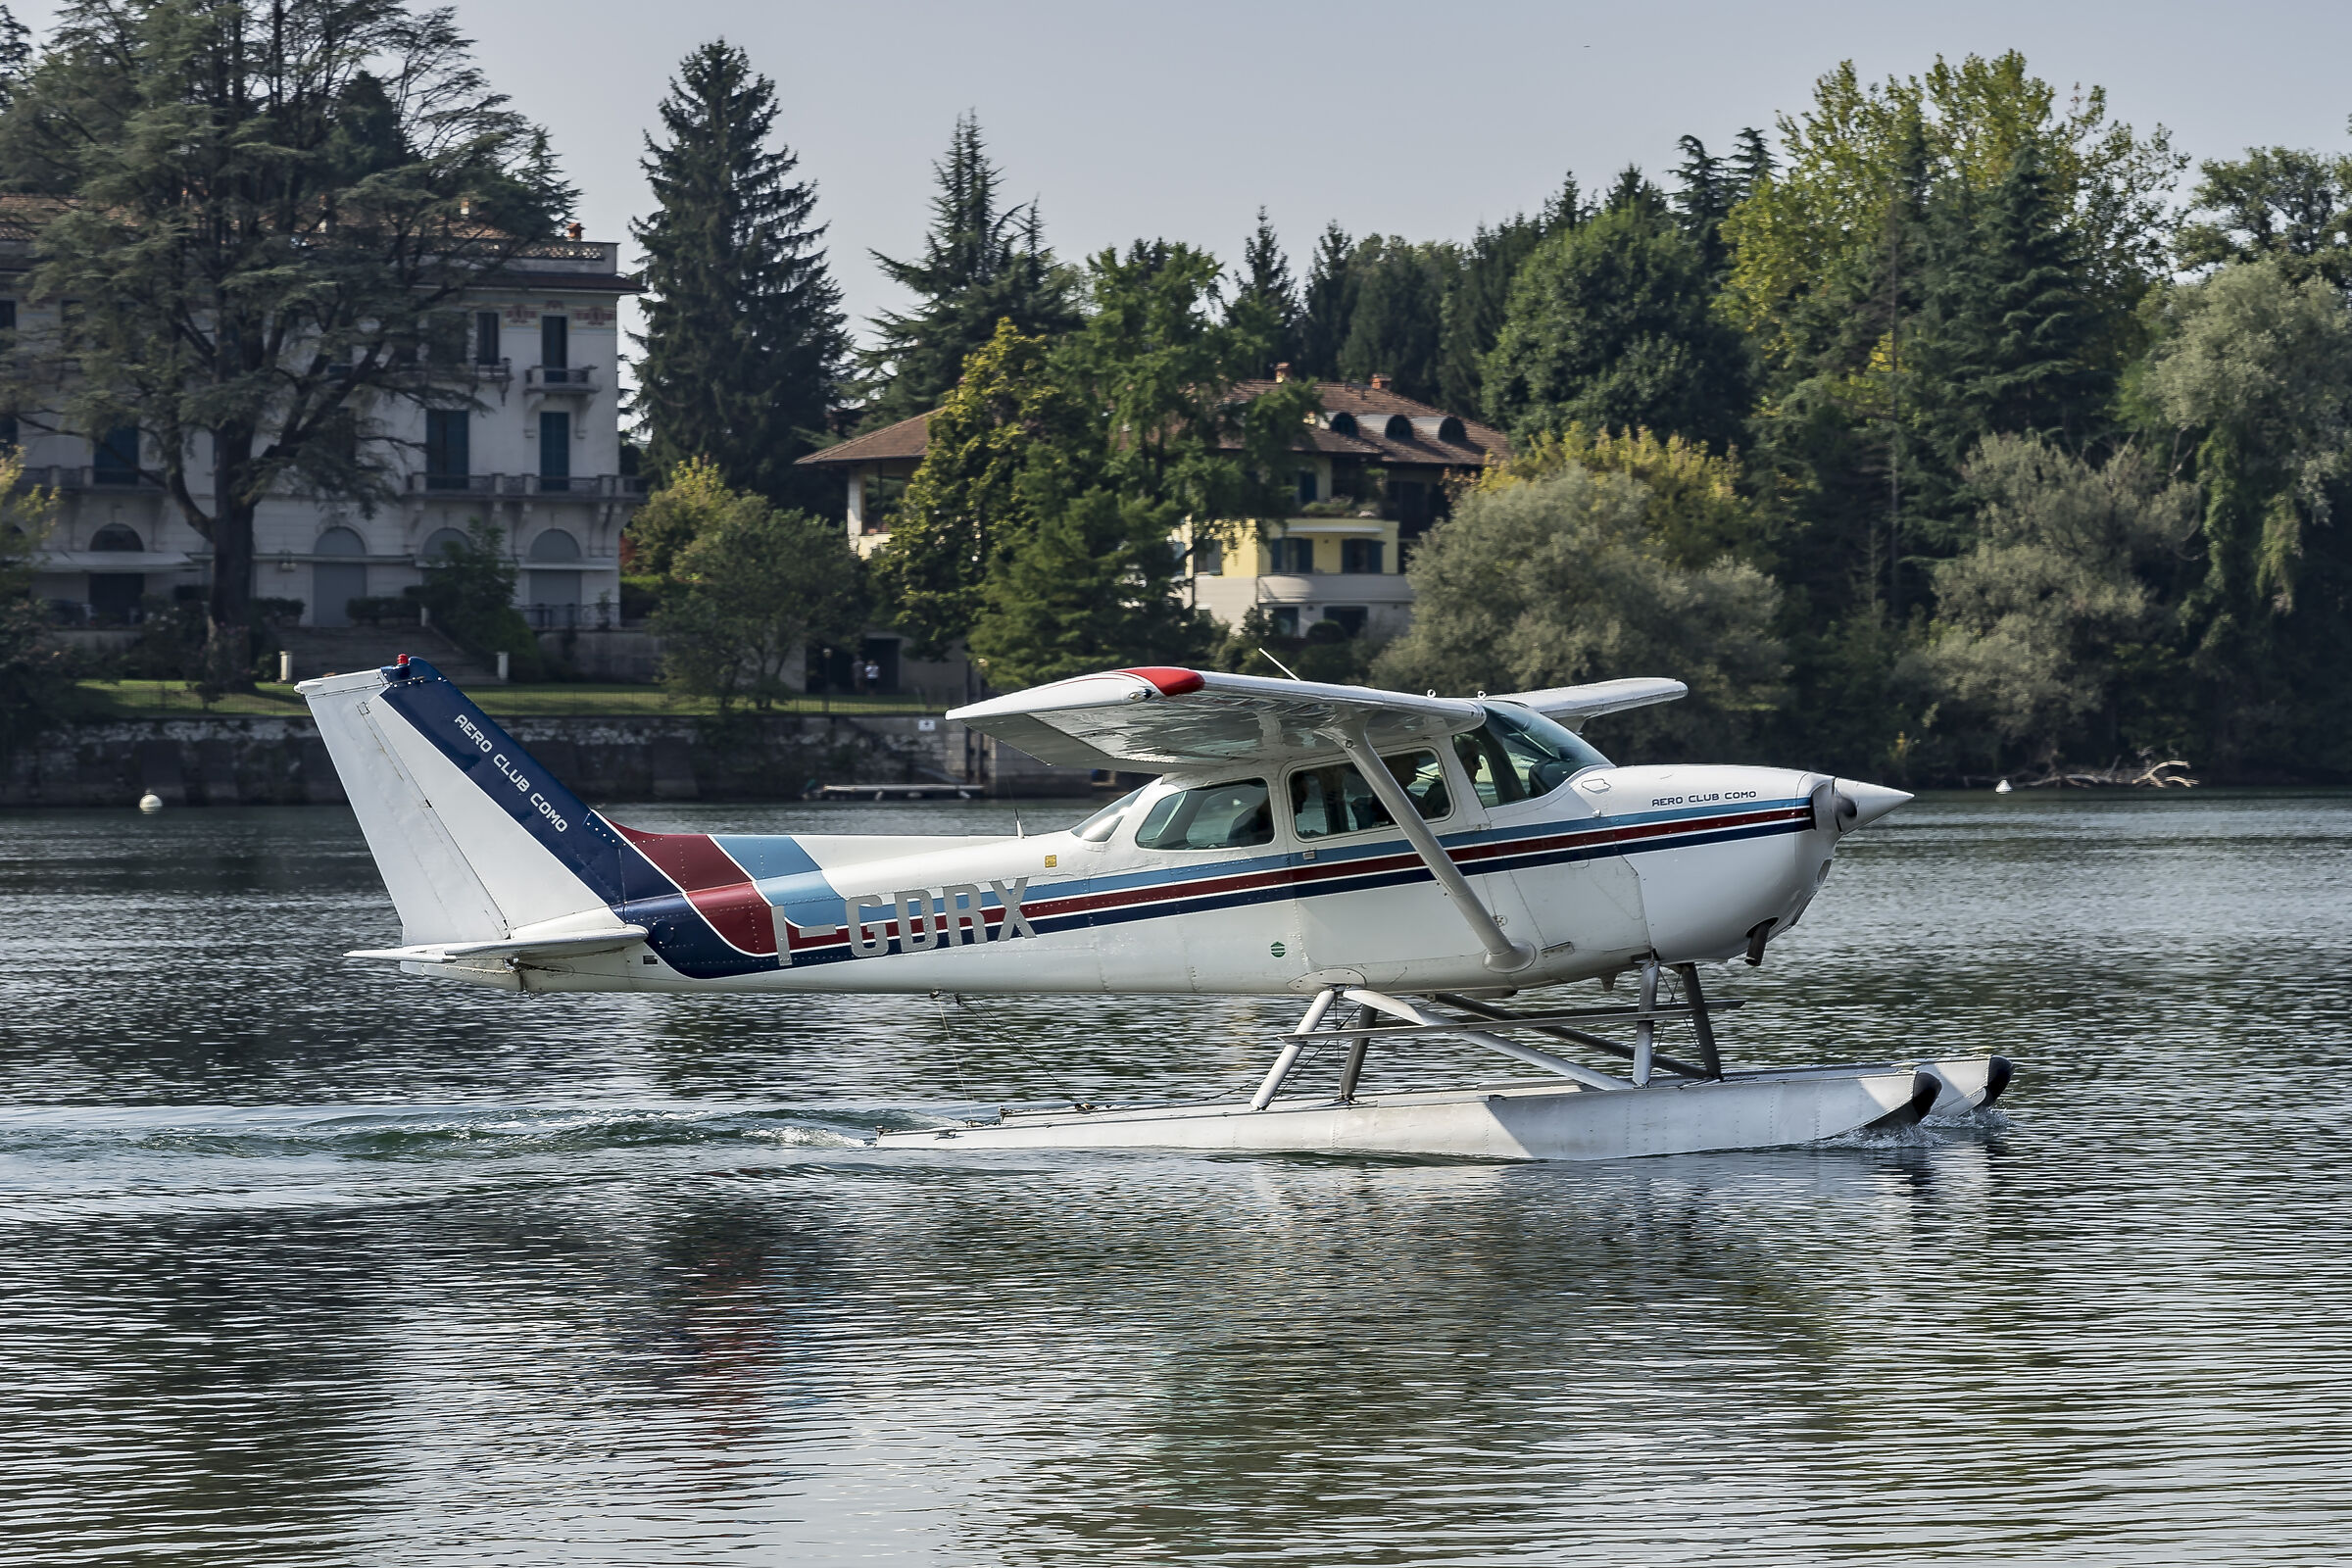 Attracco del Cessna 172 “Skyhawk” i-gdrx al pontile - 1...